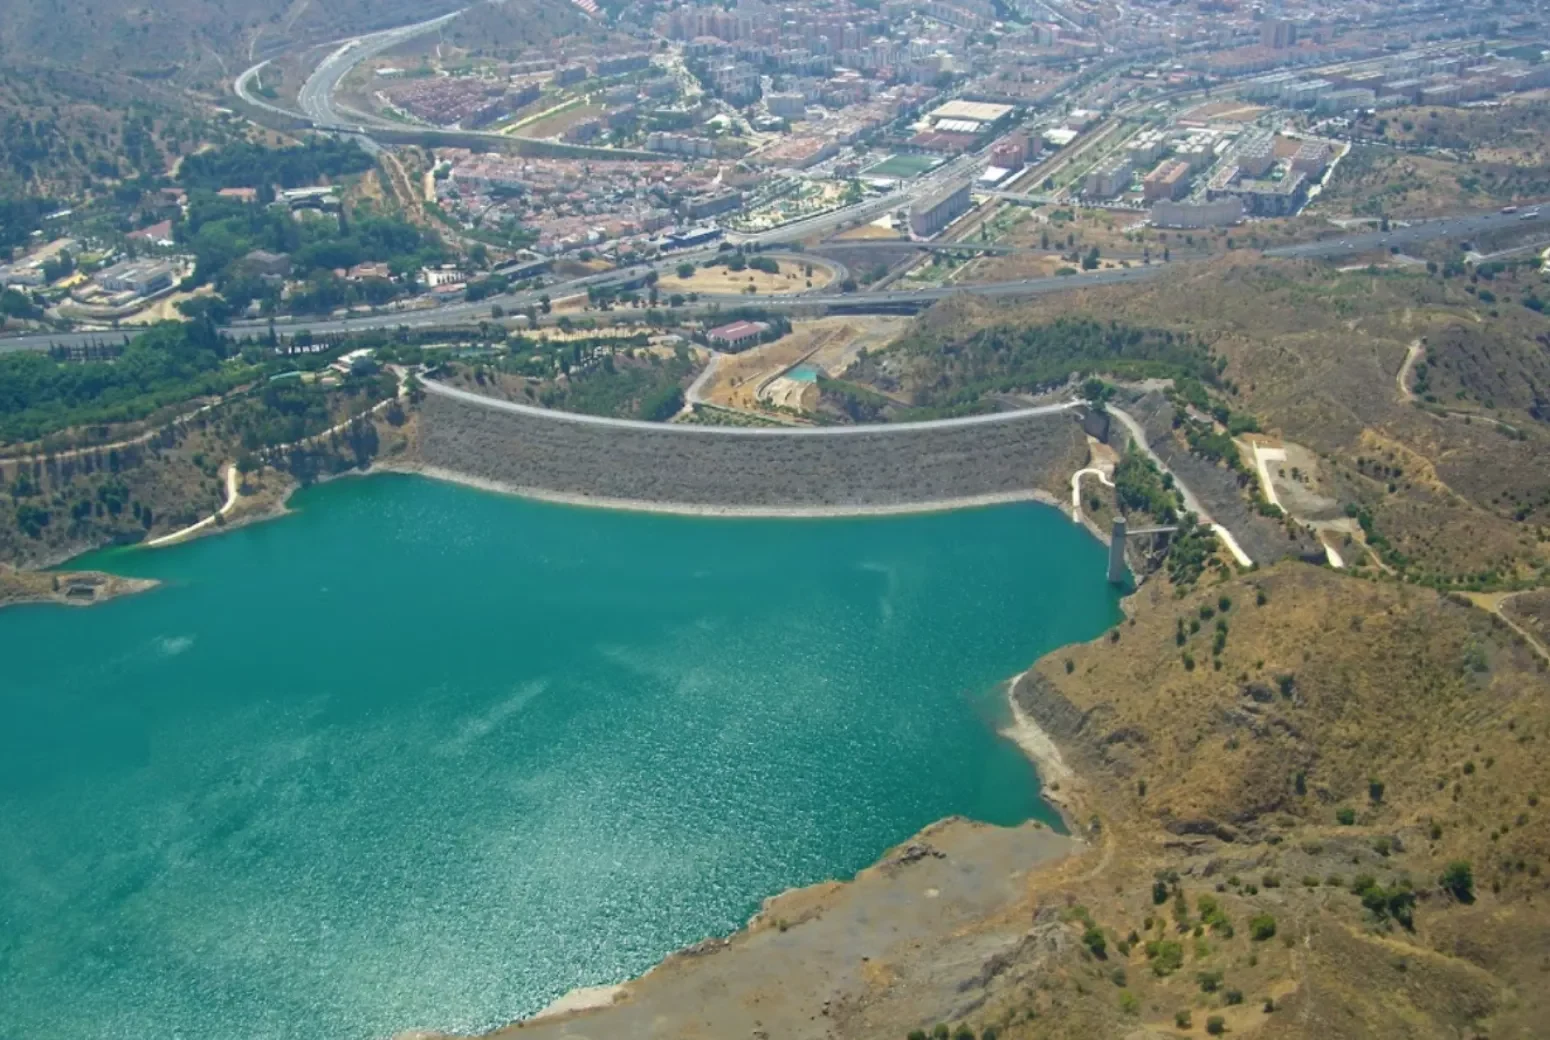 Limonero Reservoir in Malaga